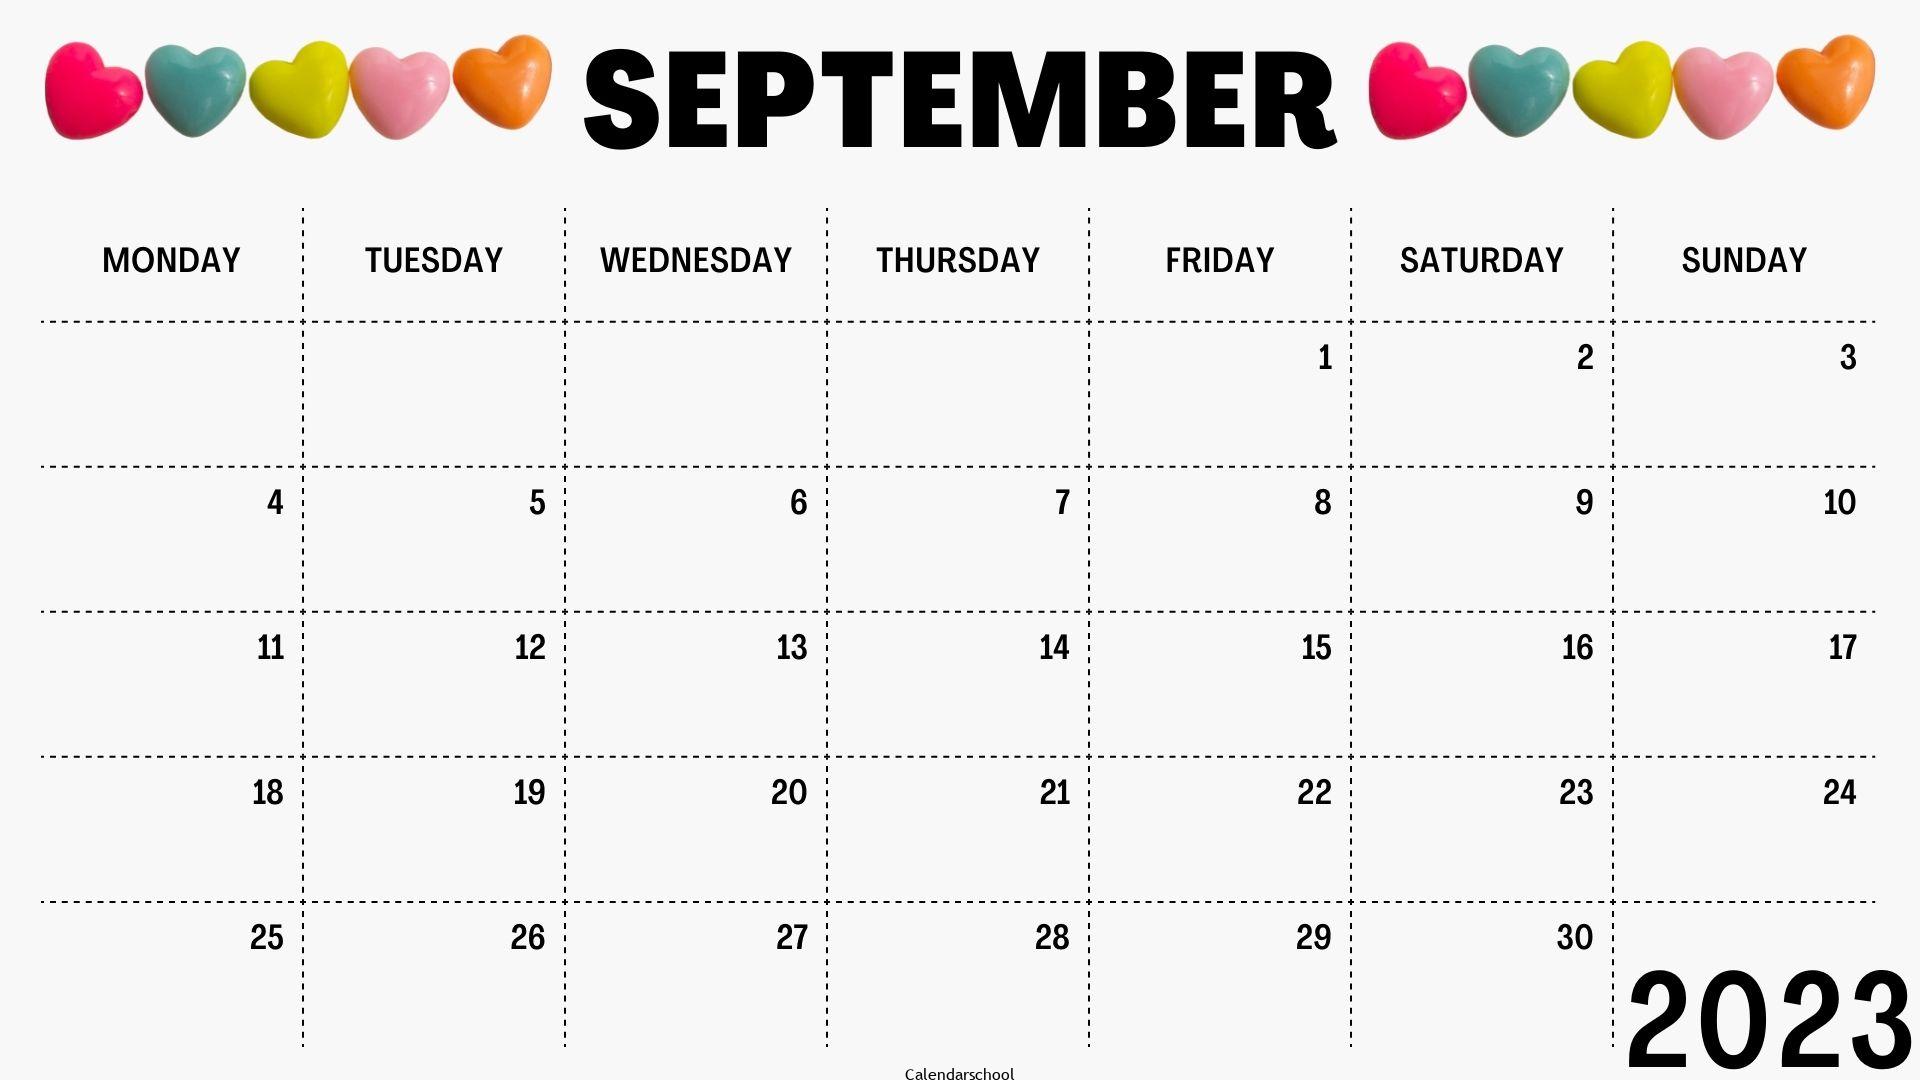 2023 September Calendar With Jewish Holidays